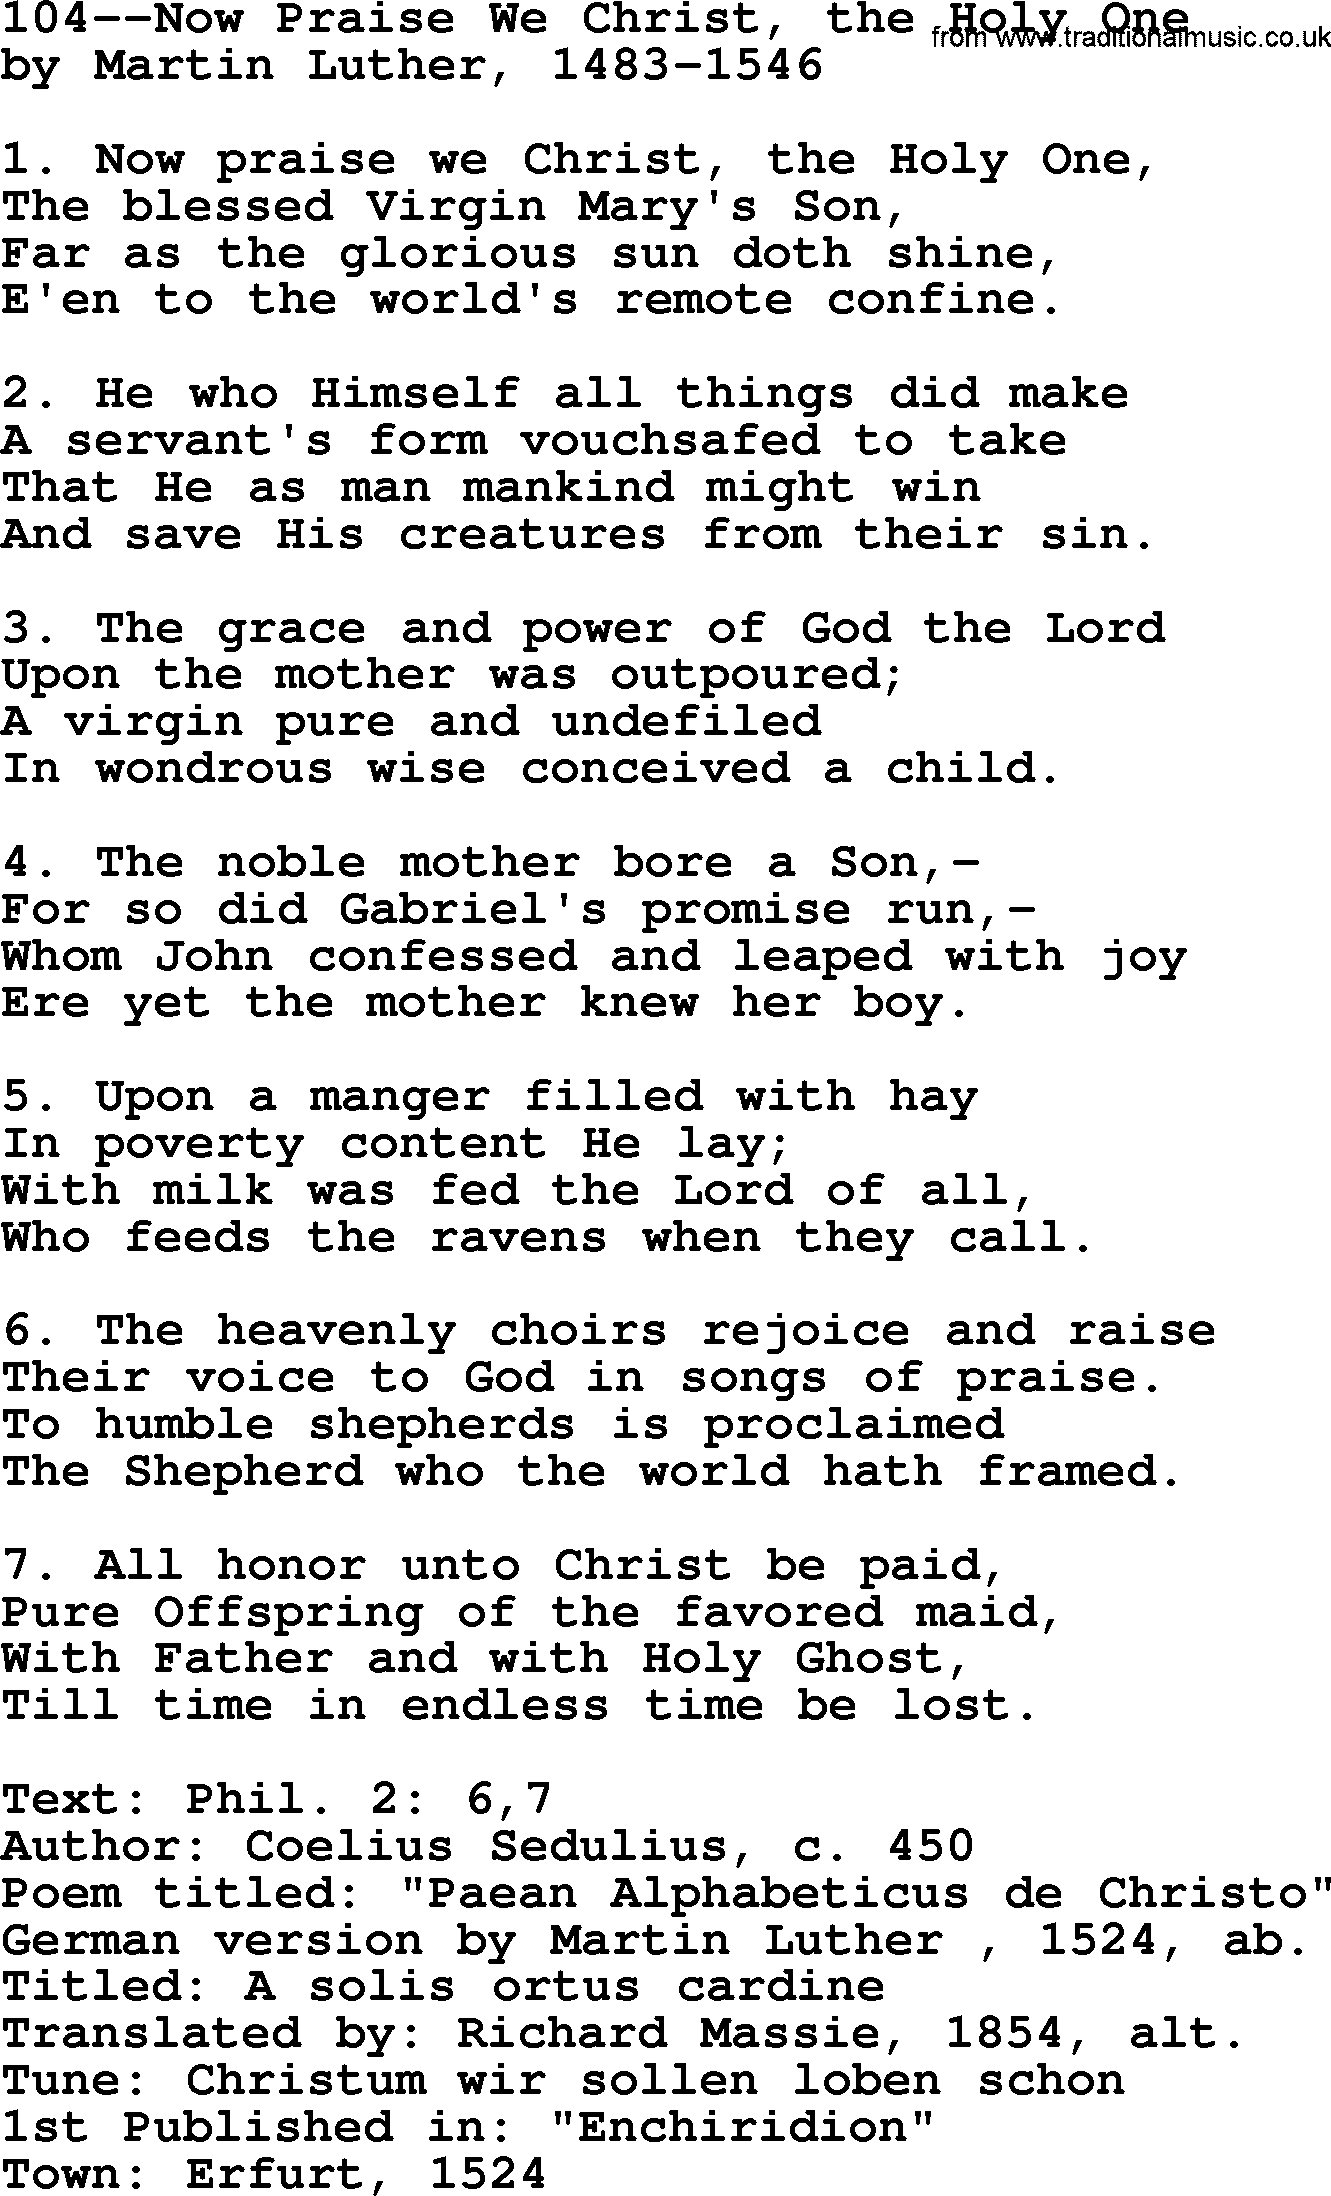 Lutheran Hymn: 104--Now Praise We Christ, the Holy One.txt lyrics with PDF